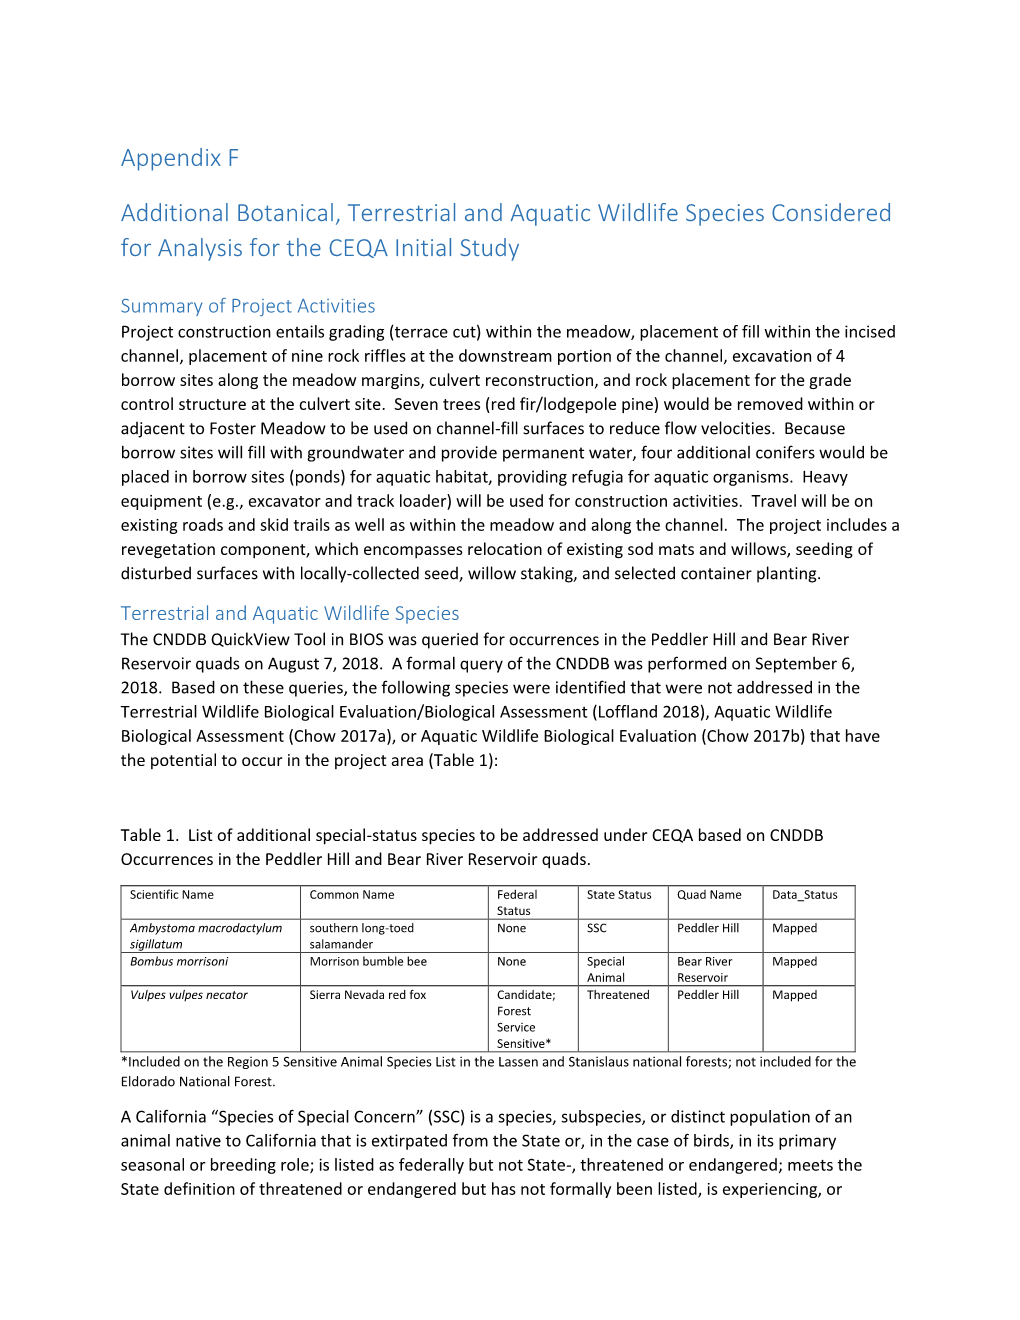 Appendix F Additional Botanical, Terrestrial and Aquatic Wildlife